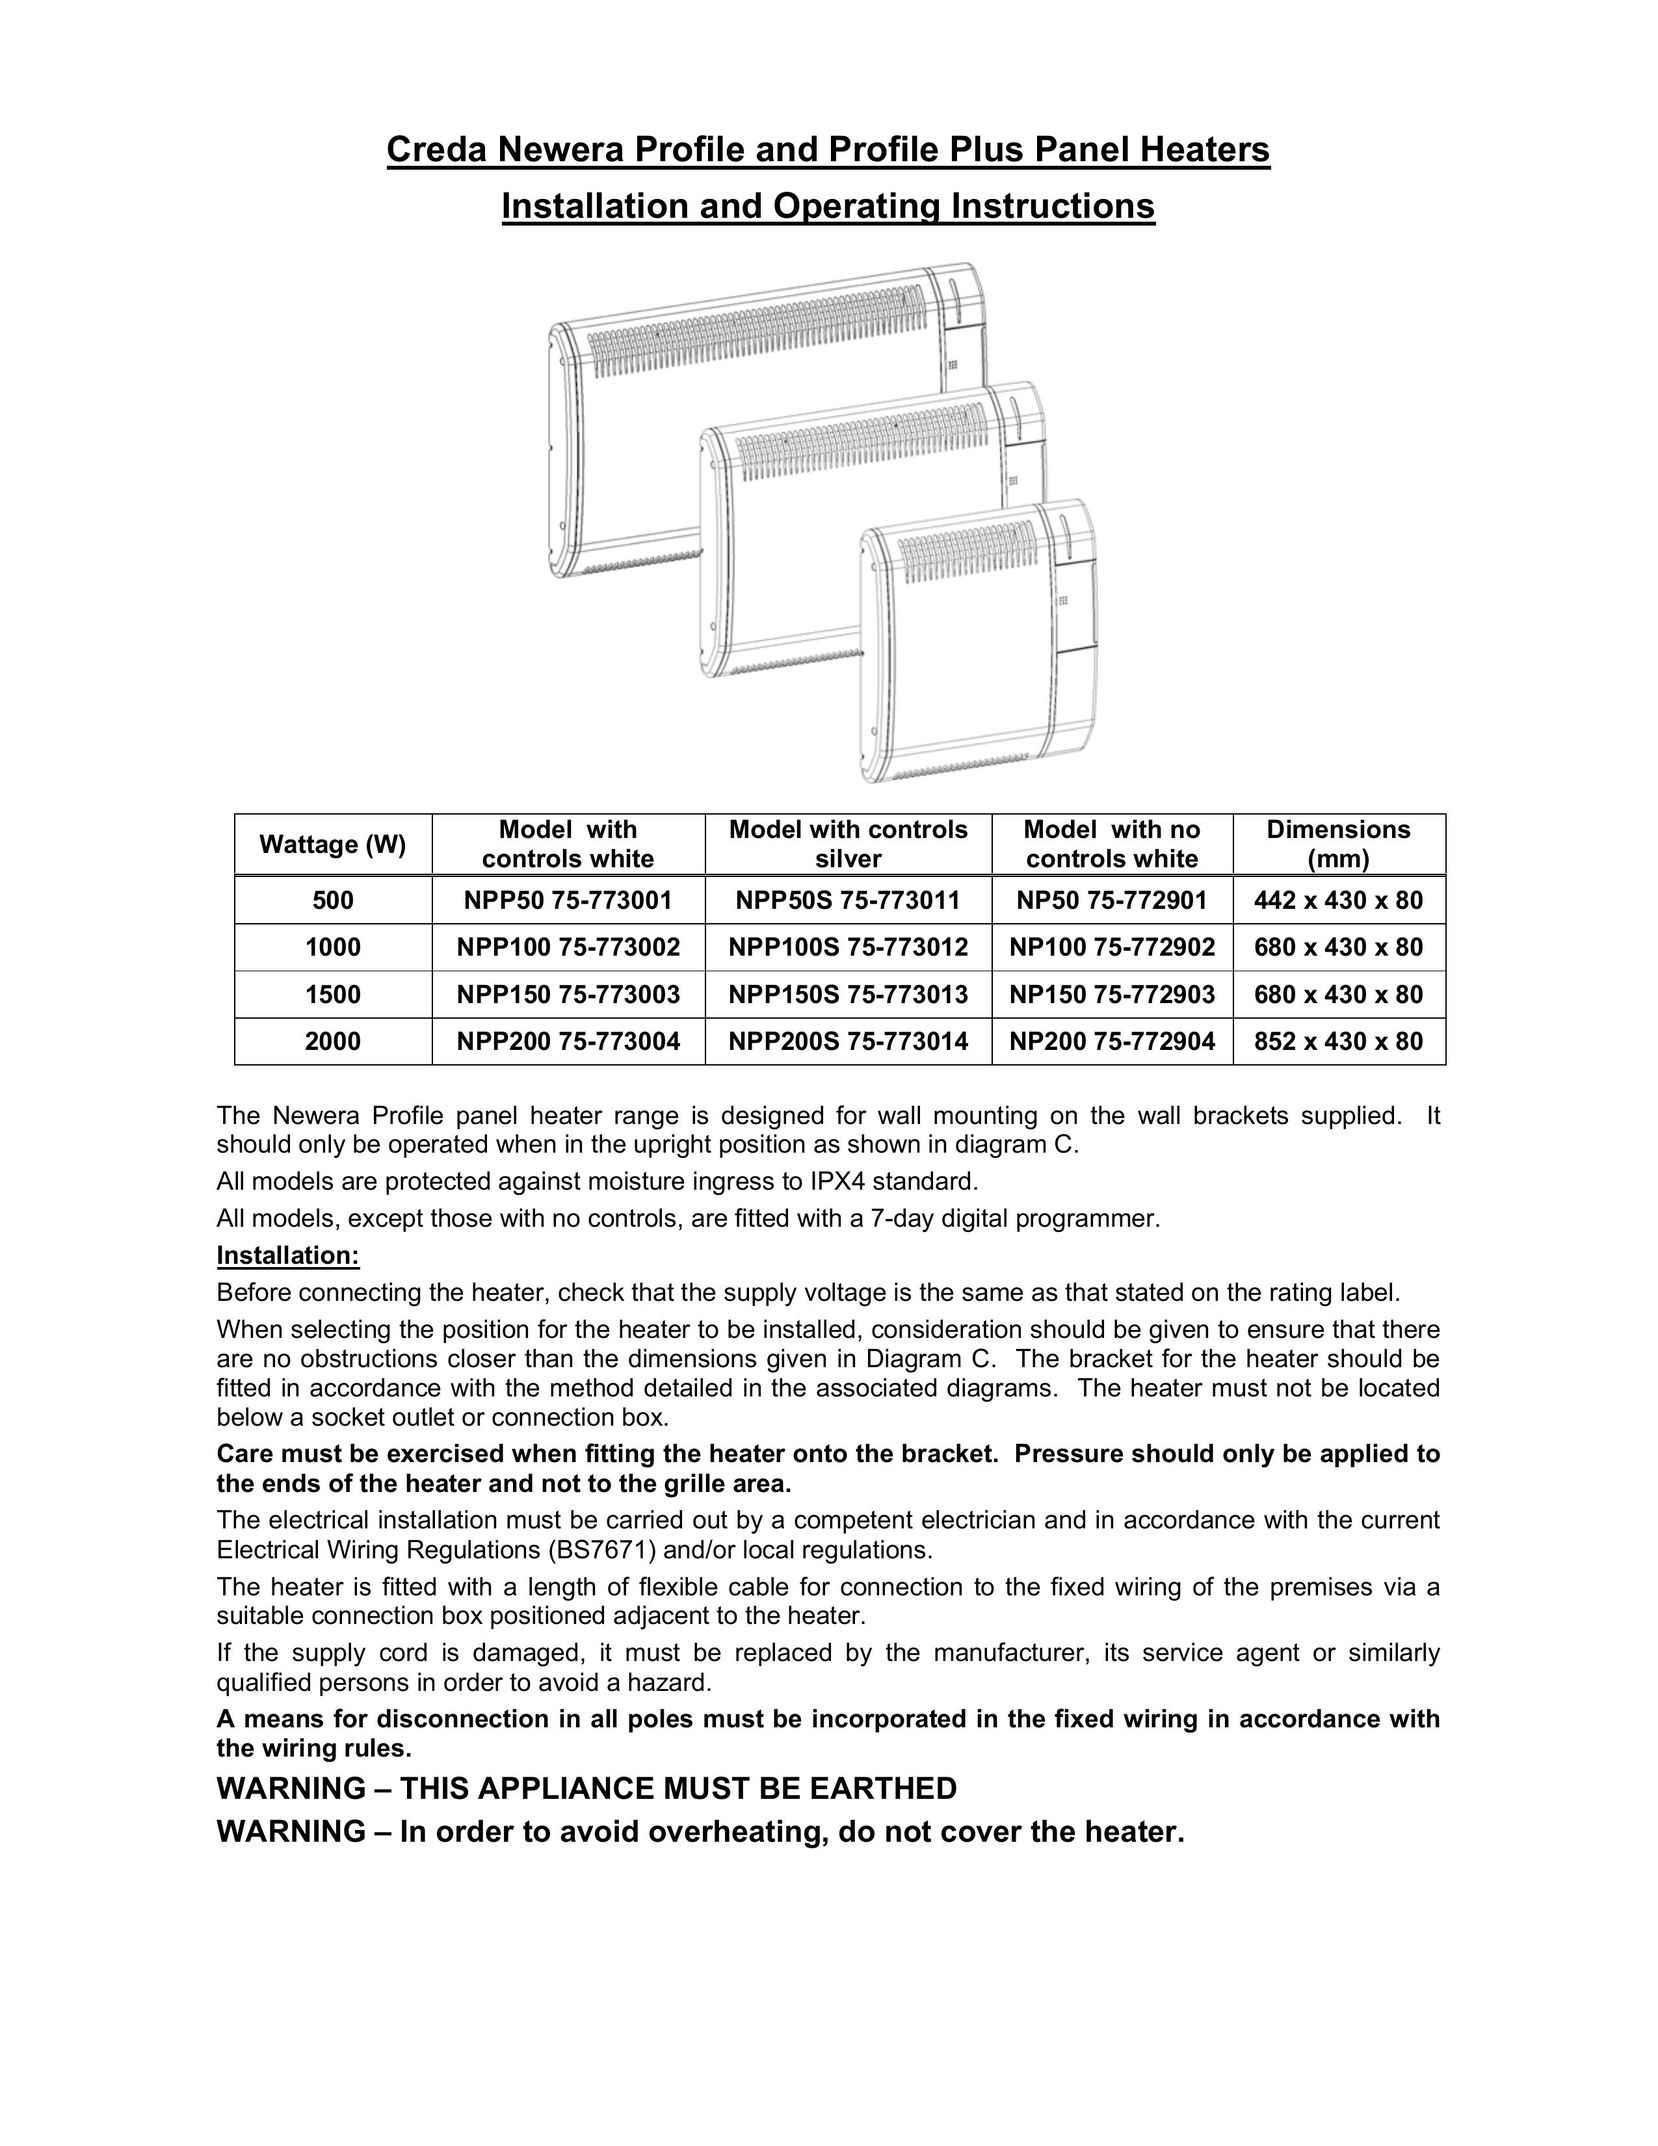 Creda NP200 75-772904 Air Conditioner User Manual